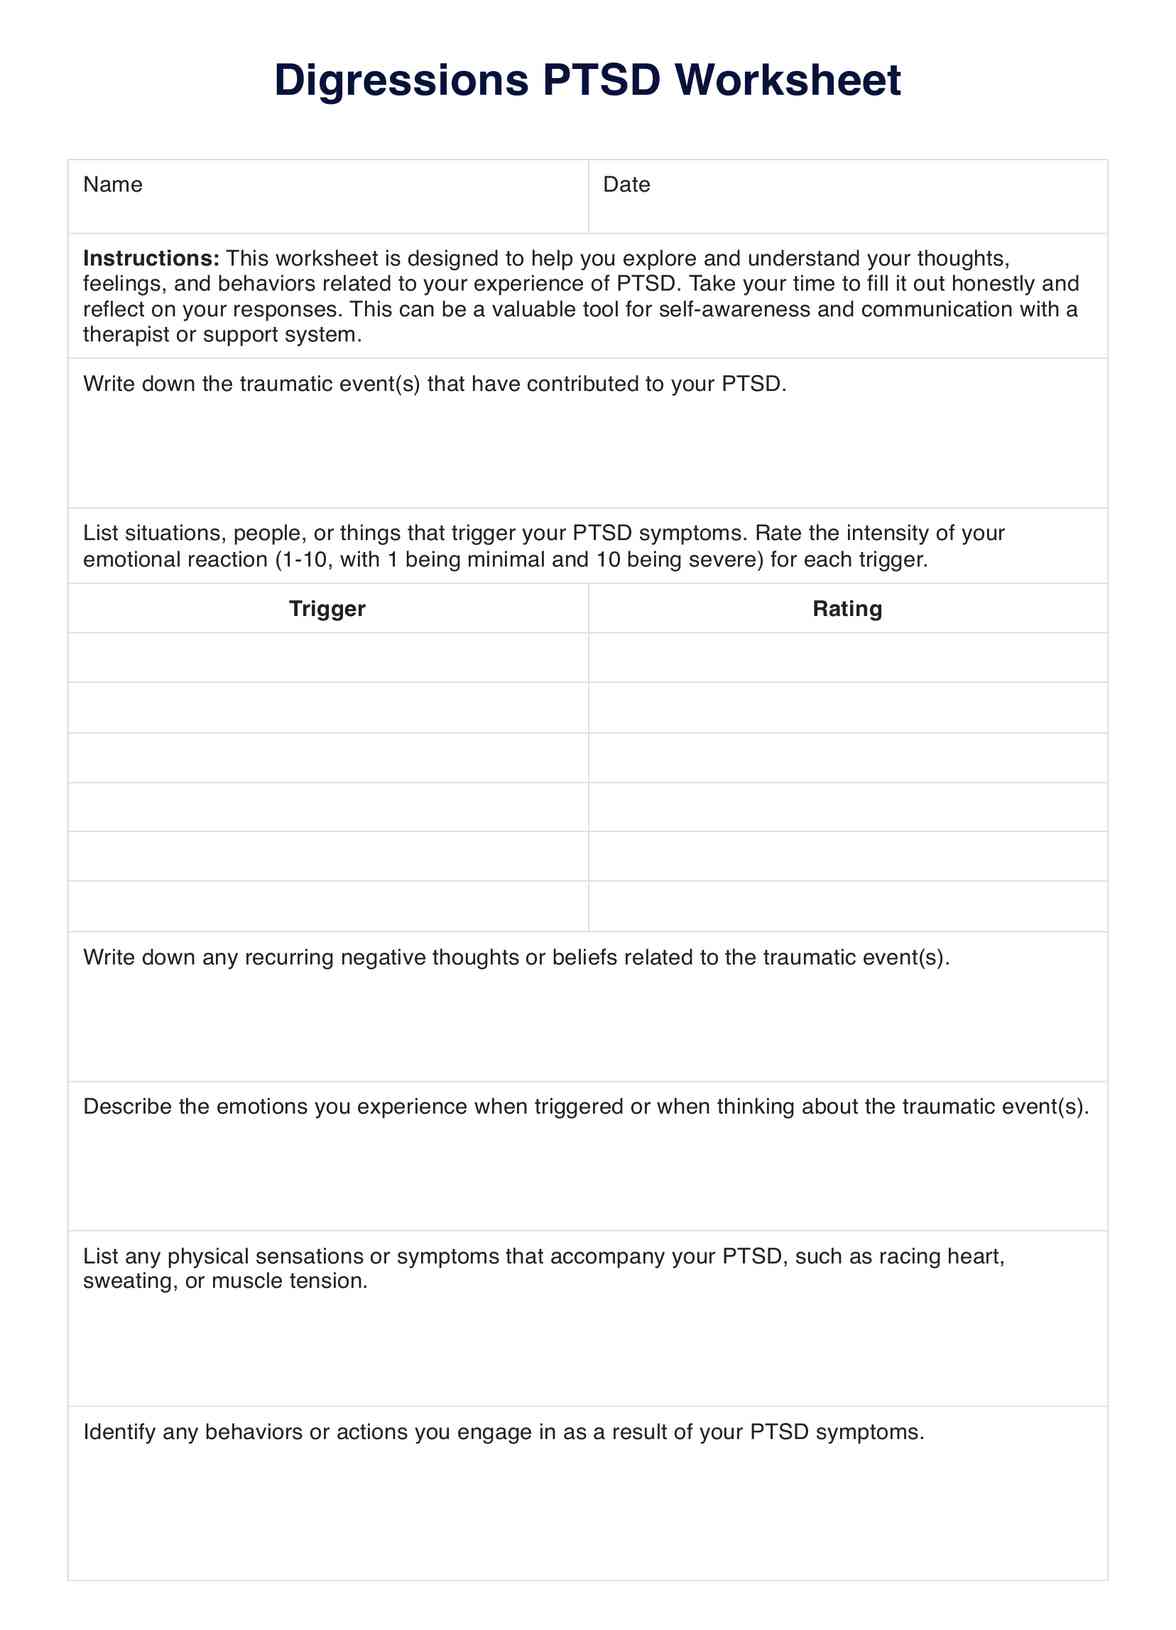 Digressions PTSD Worksheets PDF Example